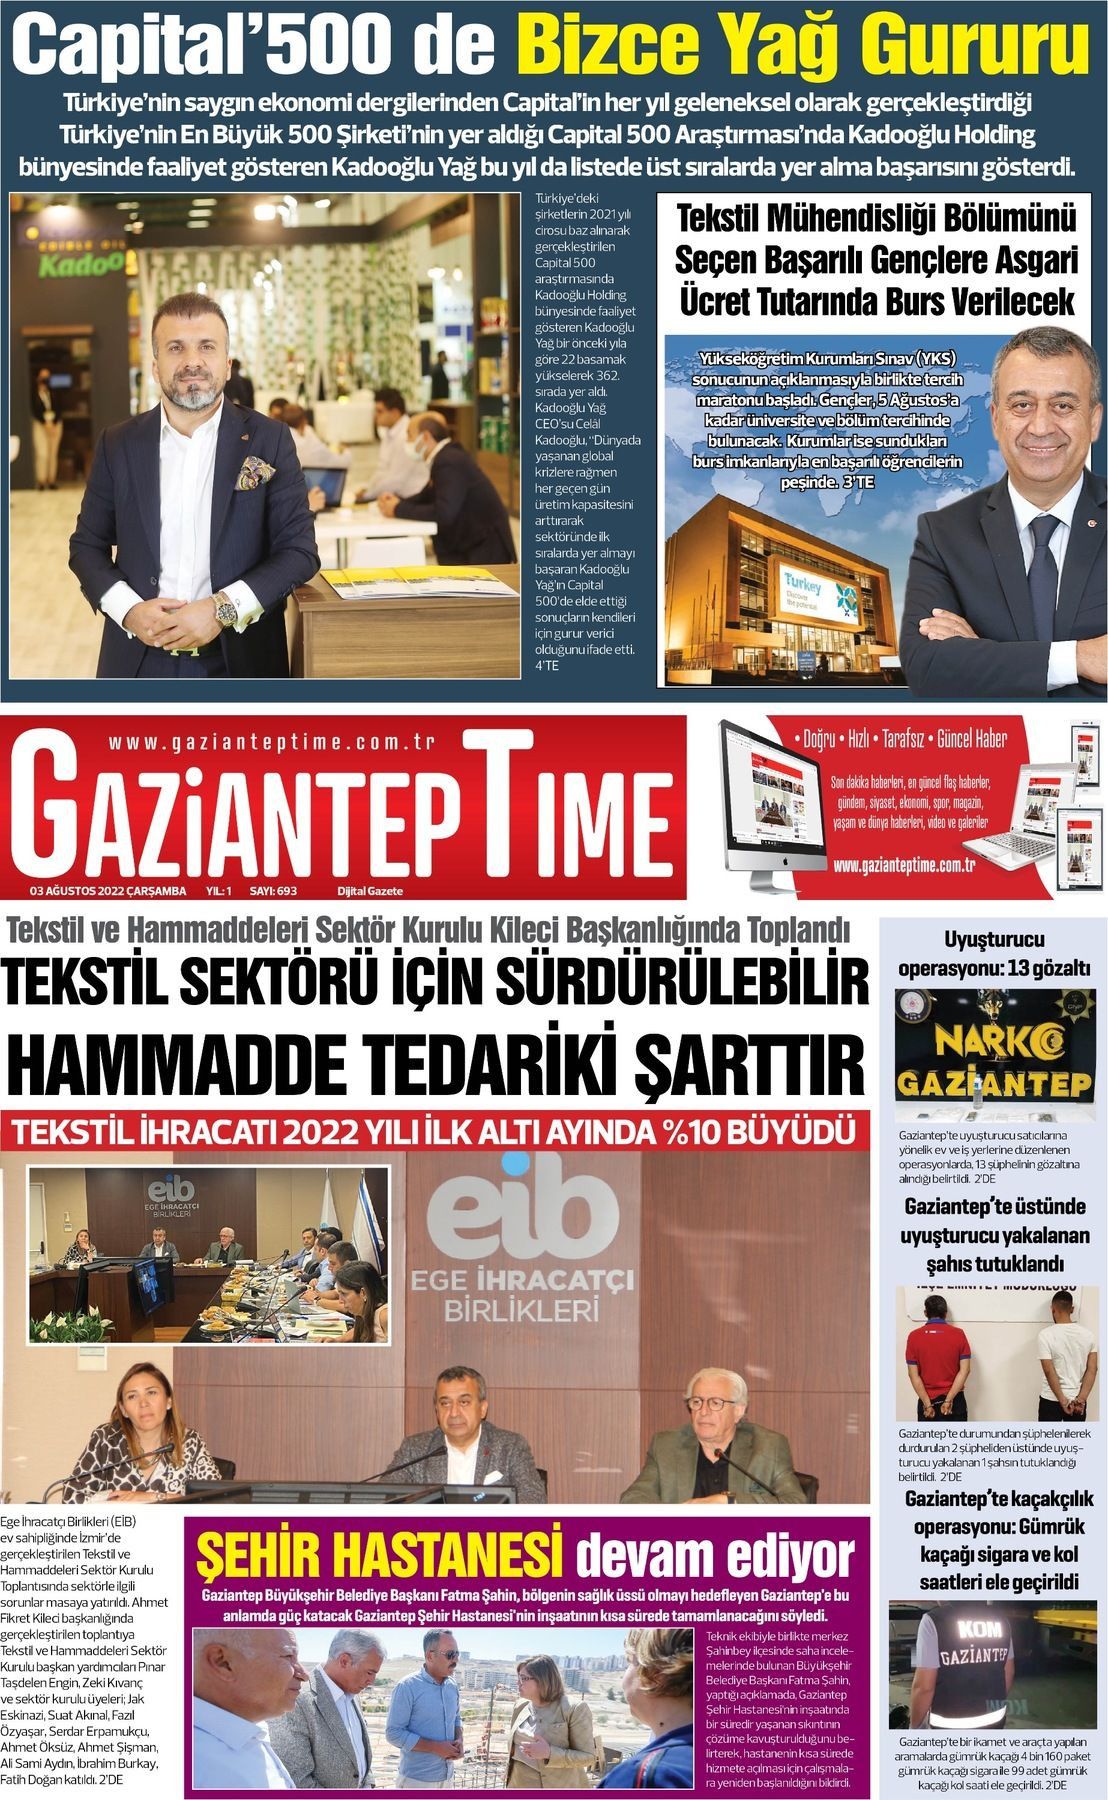 06 Ağustos 2022 Gaziantep Time Gazete Manşeti